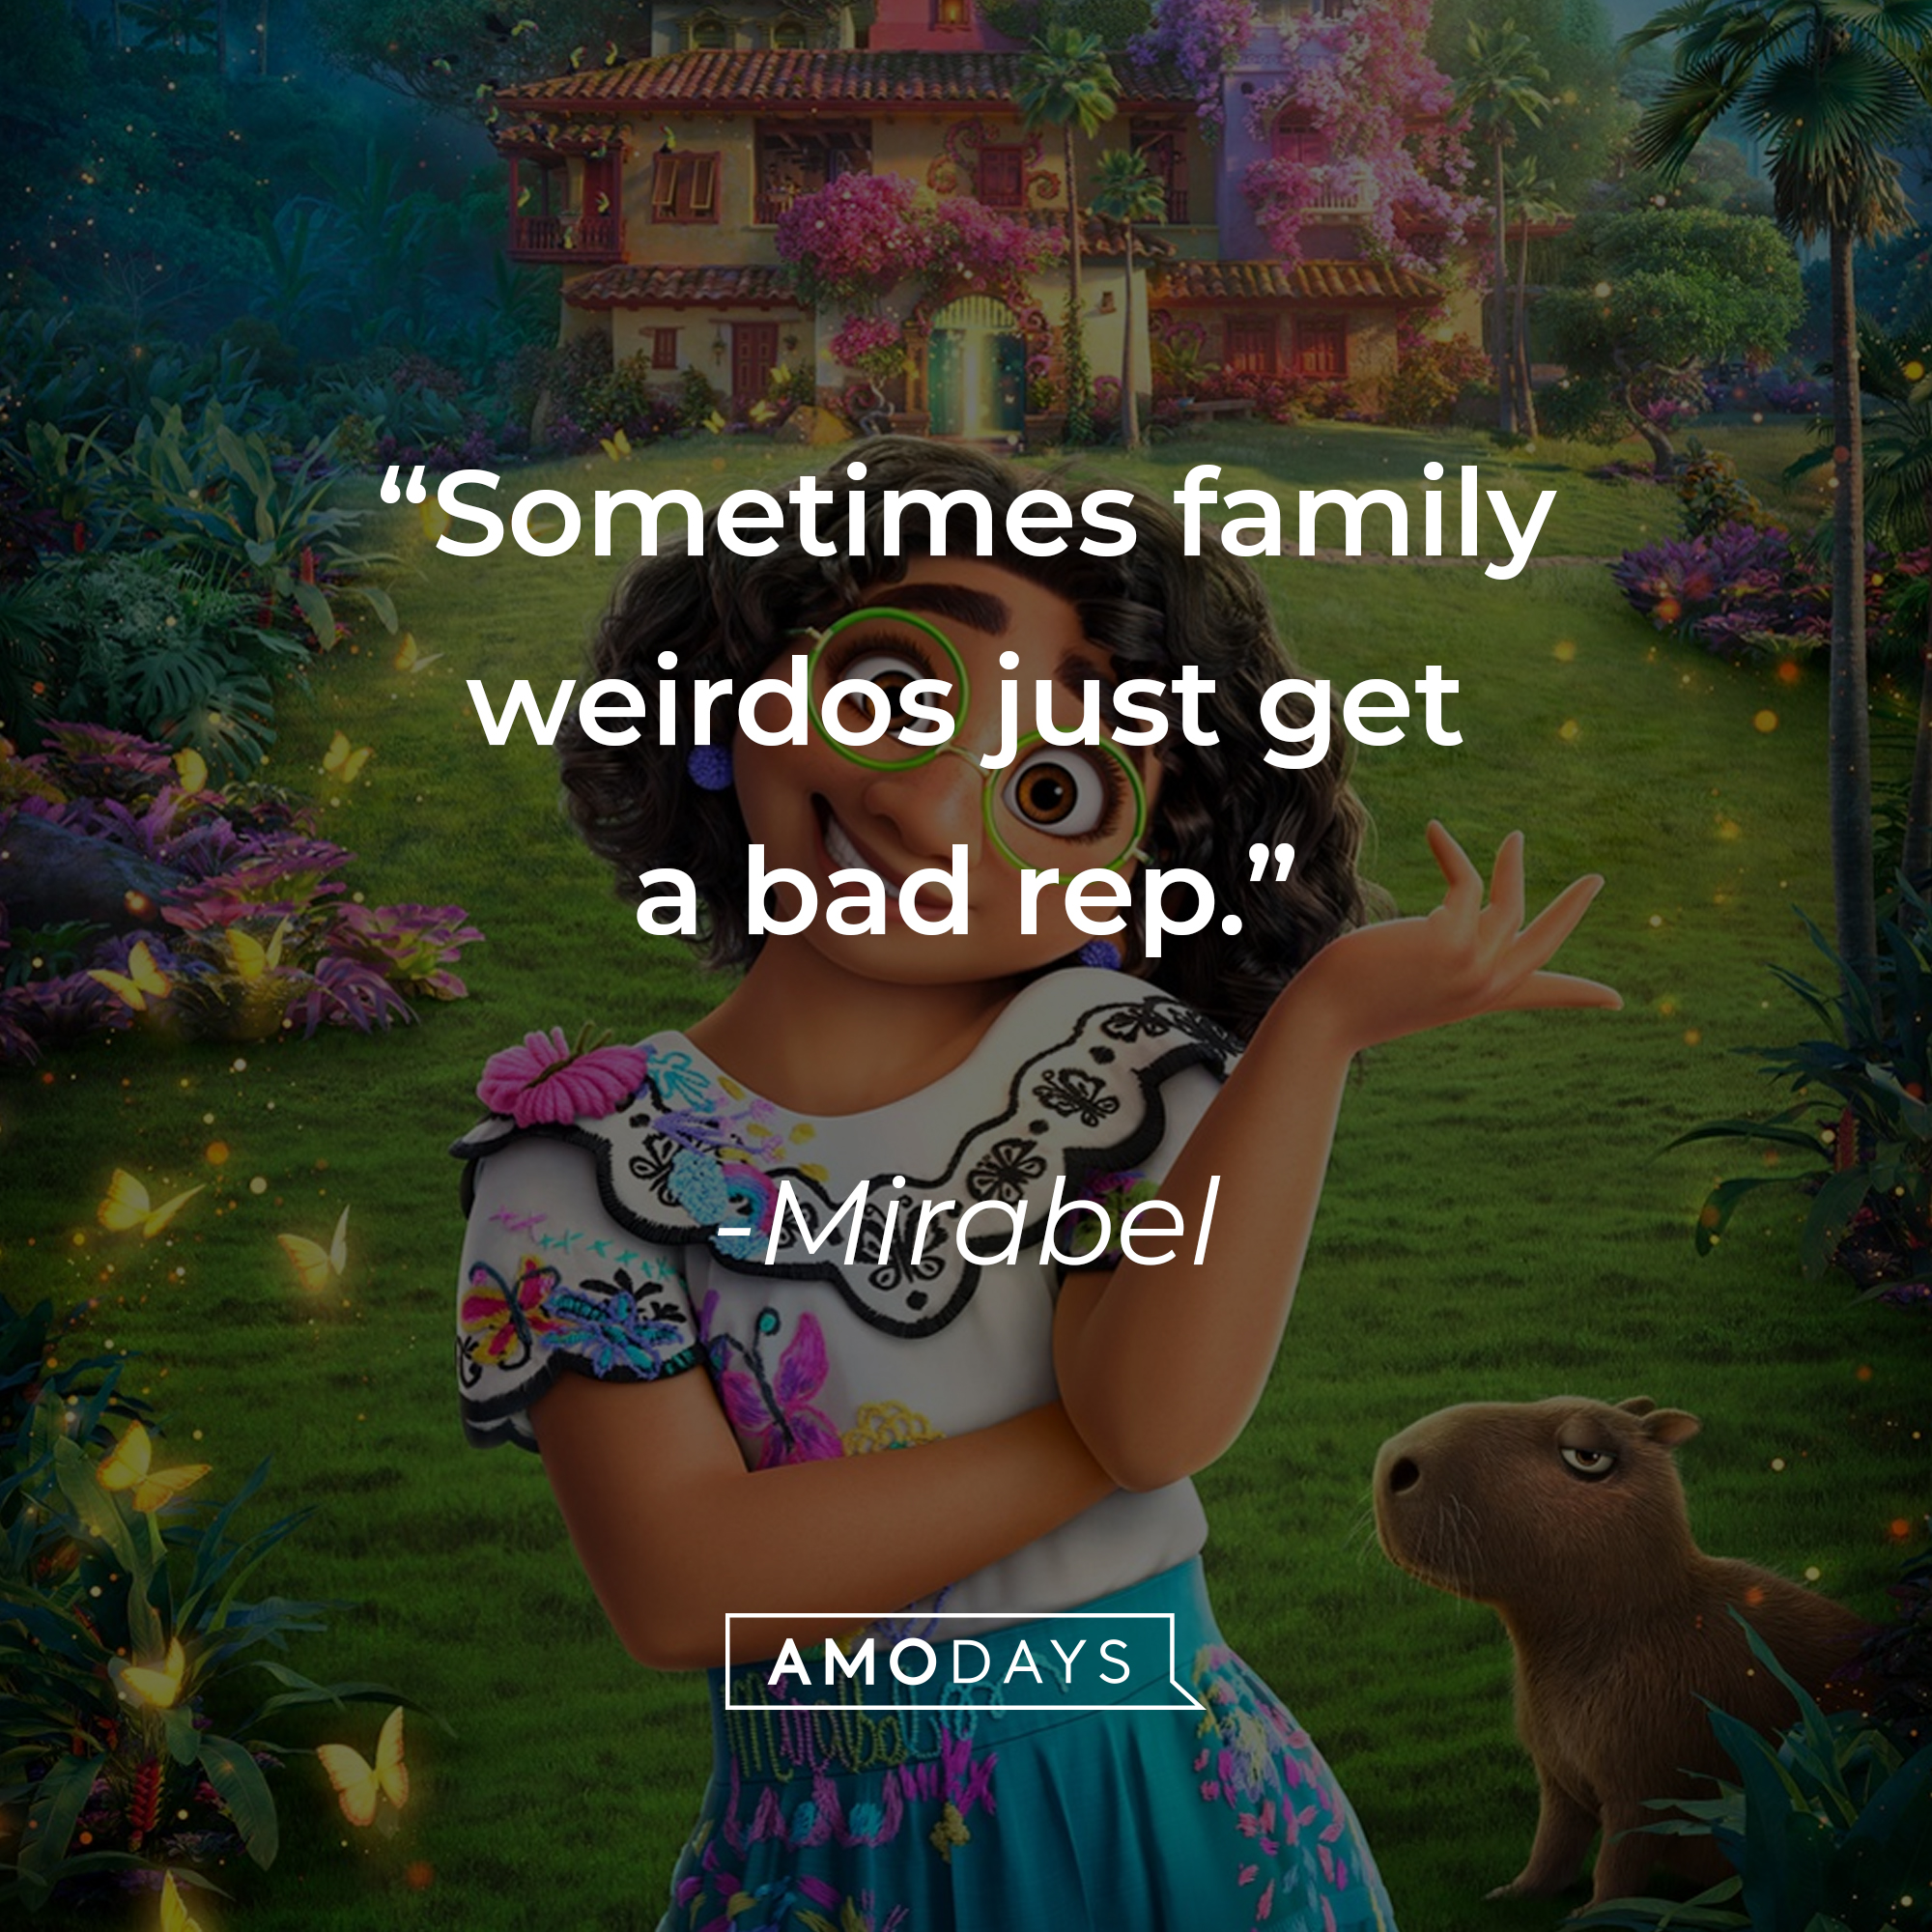 Mirabel's quote: “Sometimes family weirdos just get a bad rep.” | Source: Facebook.com/EncantoMovie